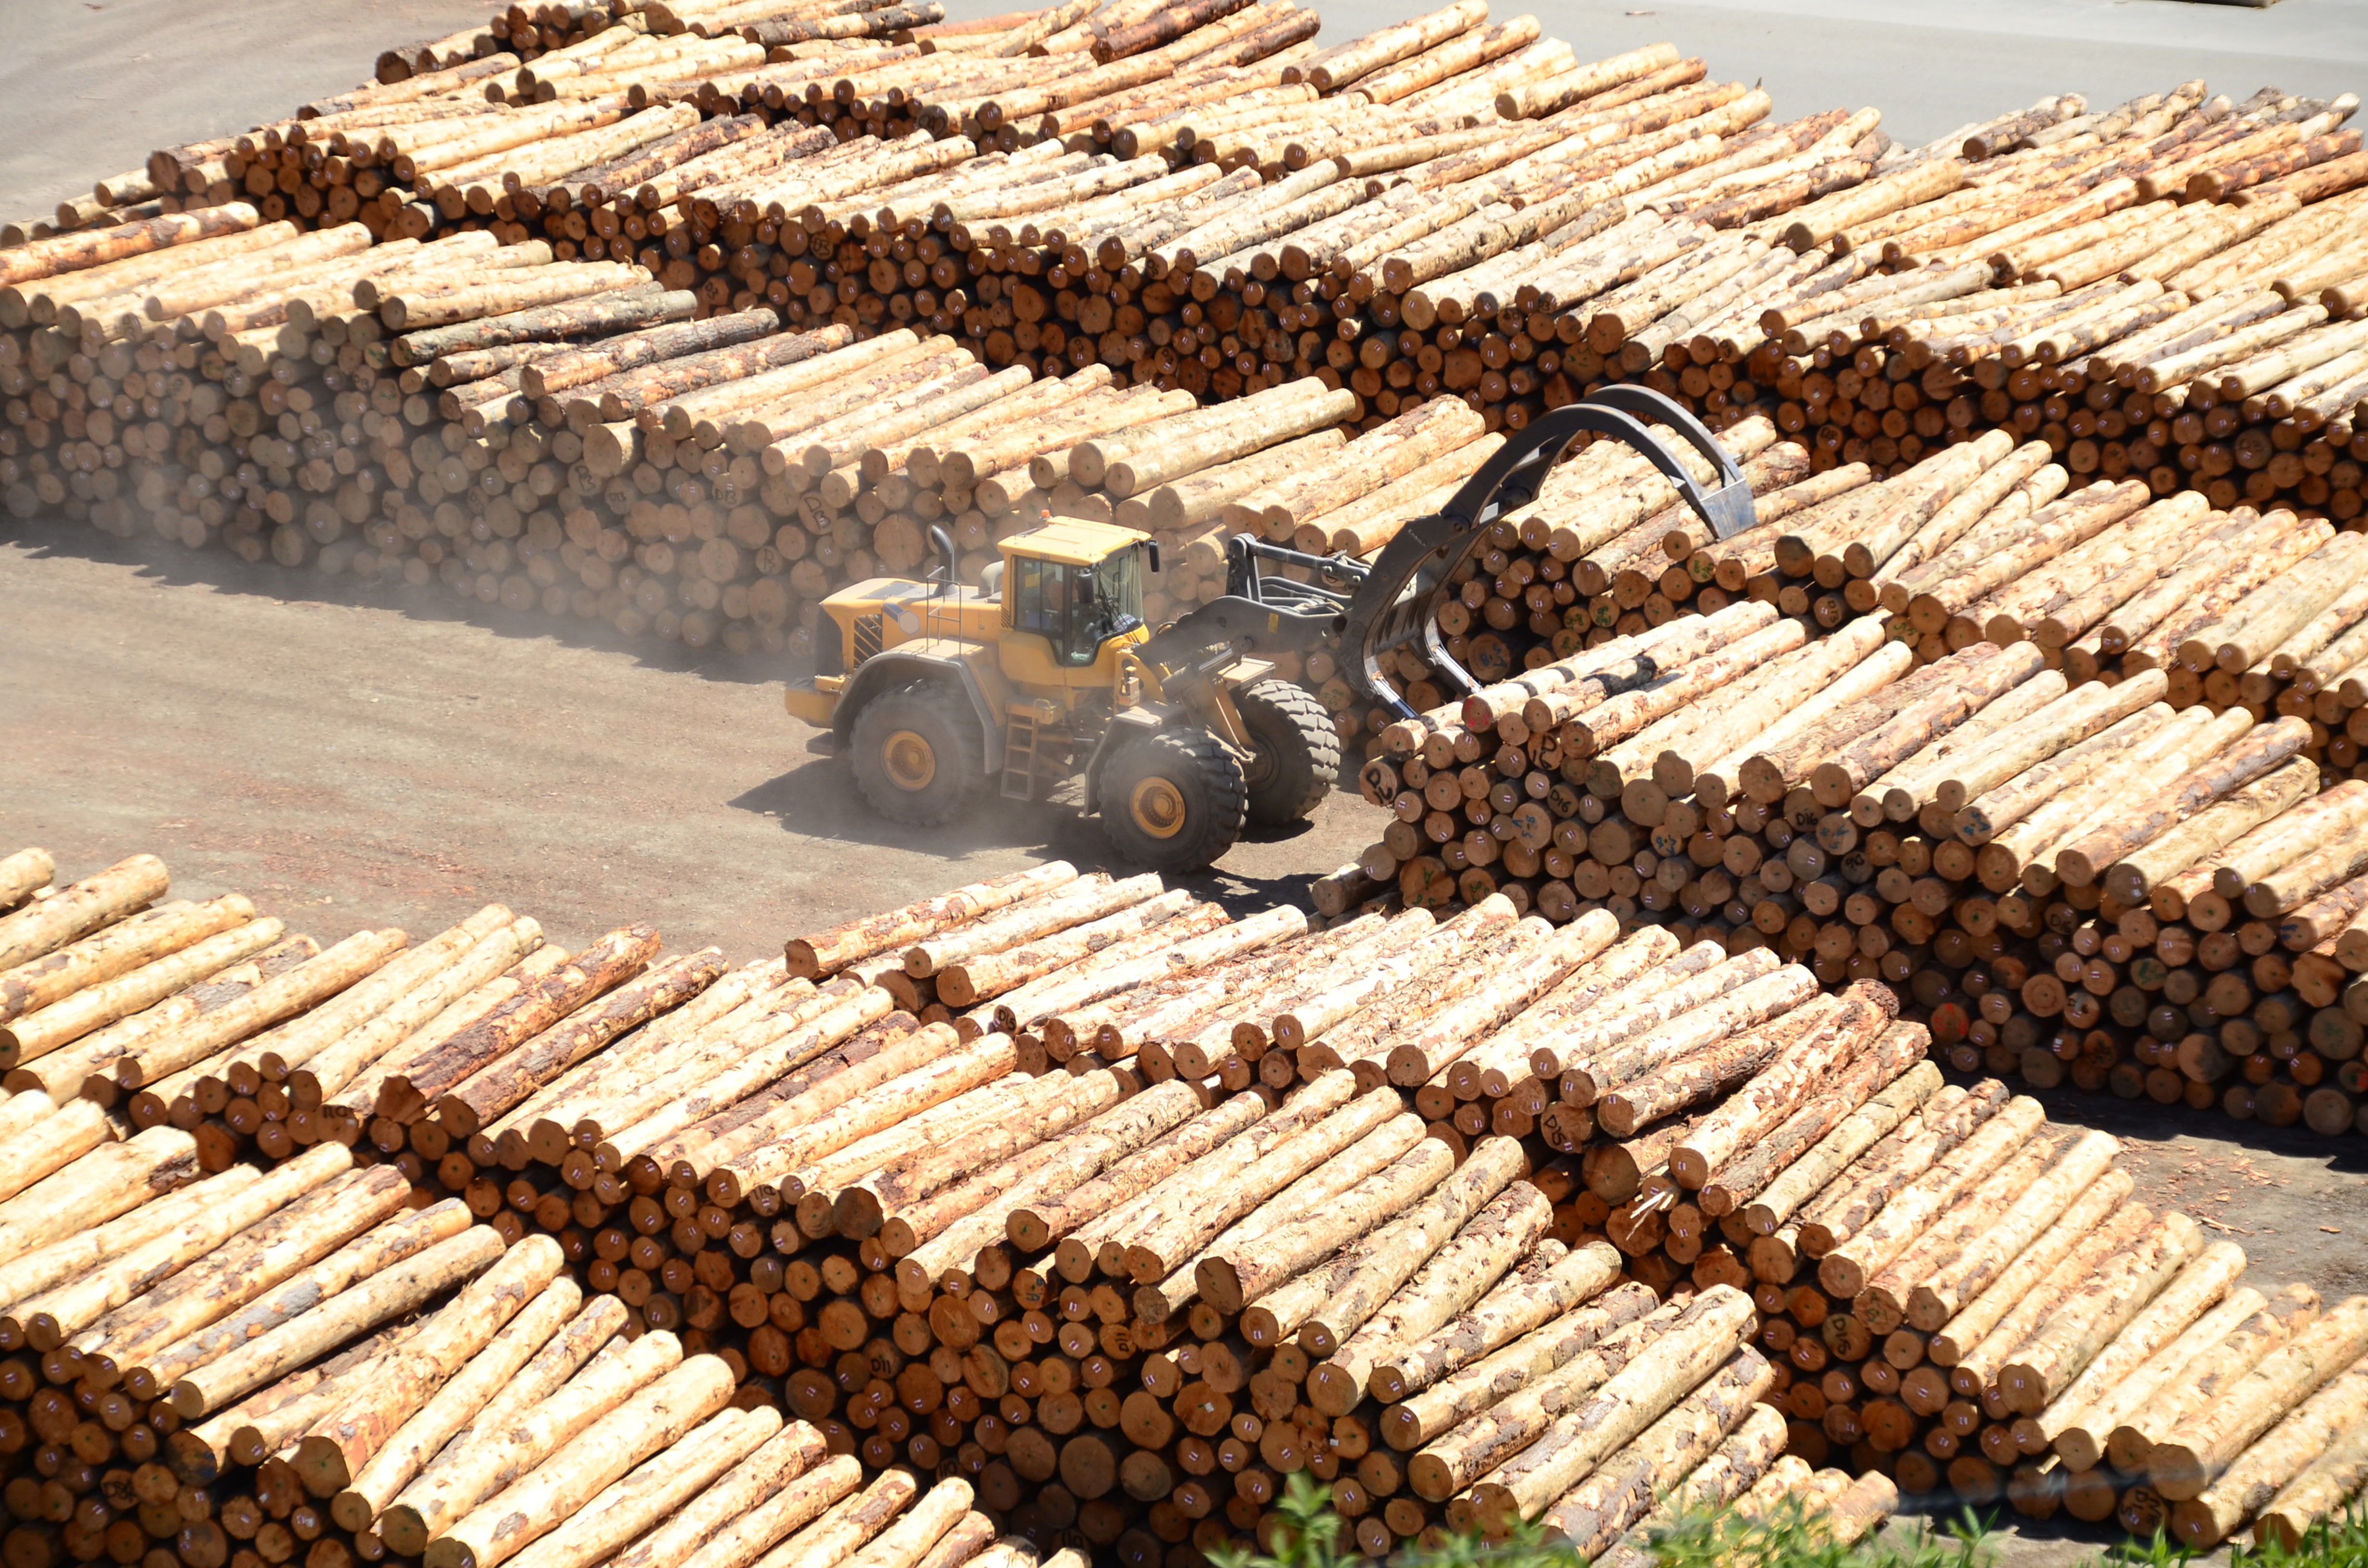 Logging tractor sorting logs